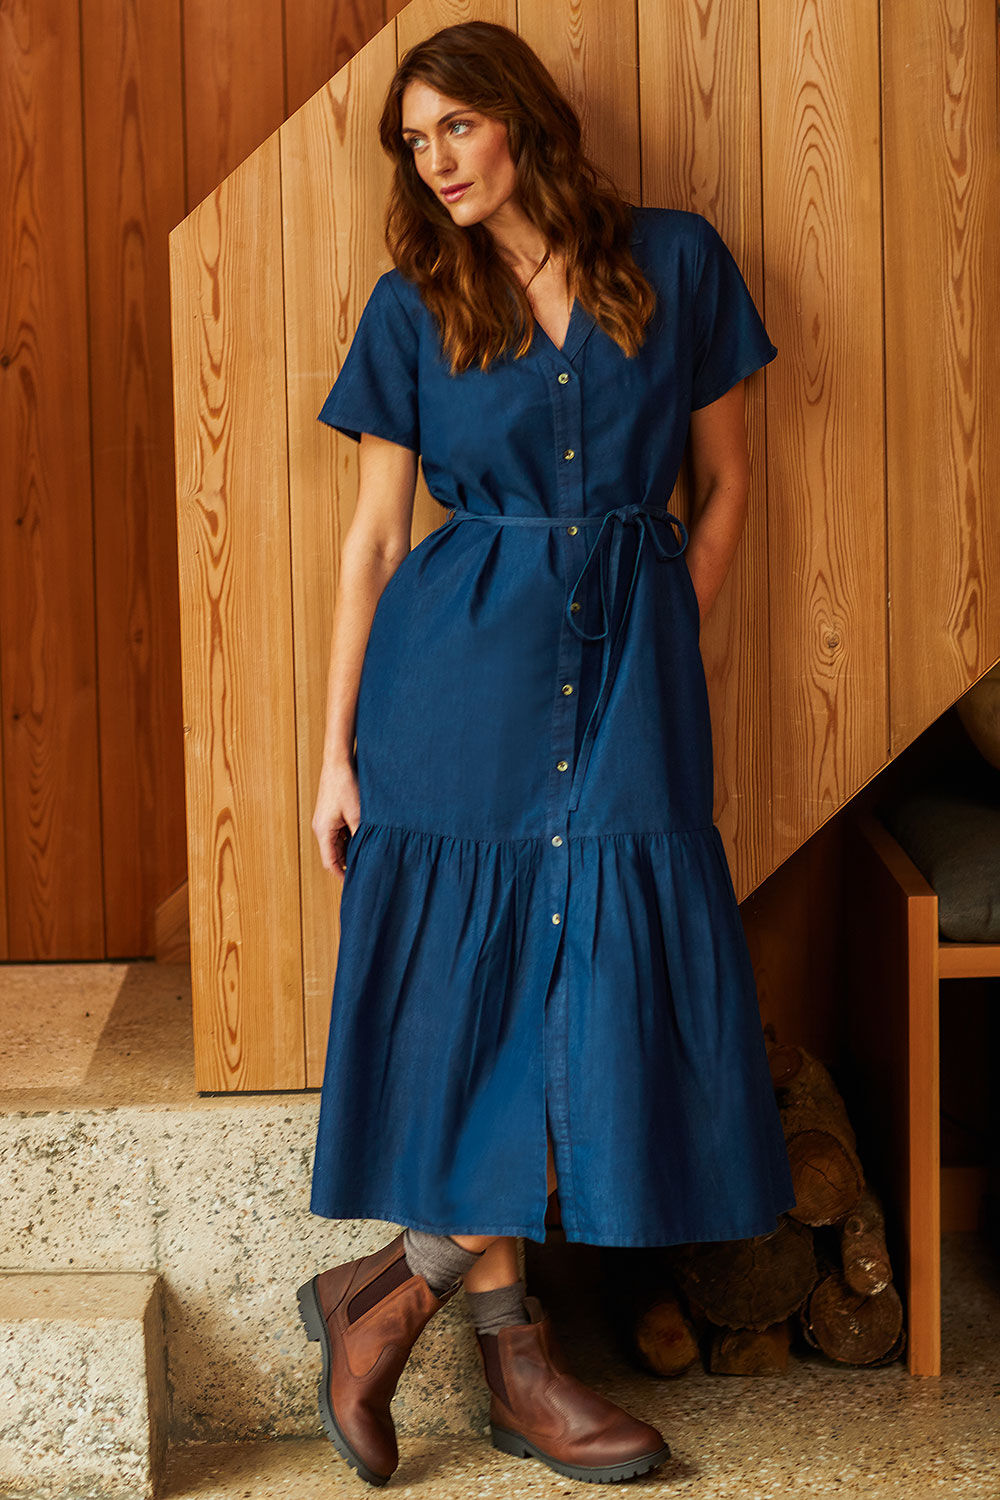 Autonomy Women’s Blue Cotton Denim Shirt Dress with Collar Neckline, Size: S